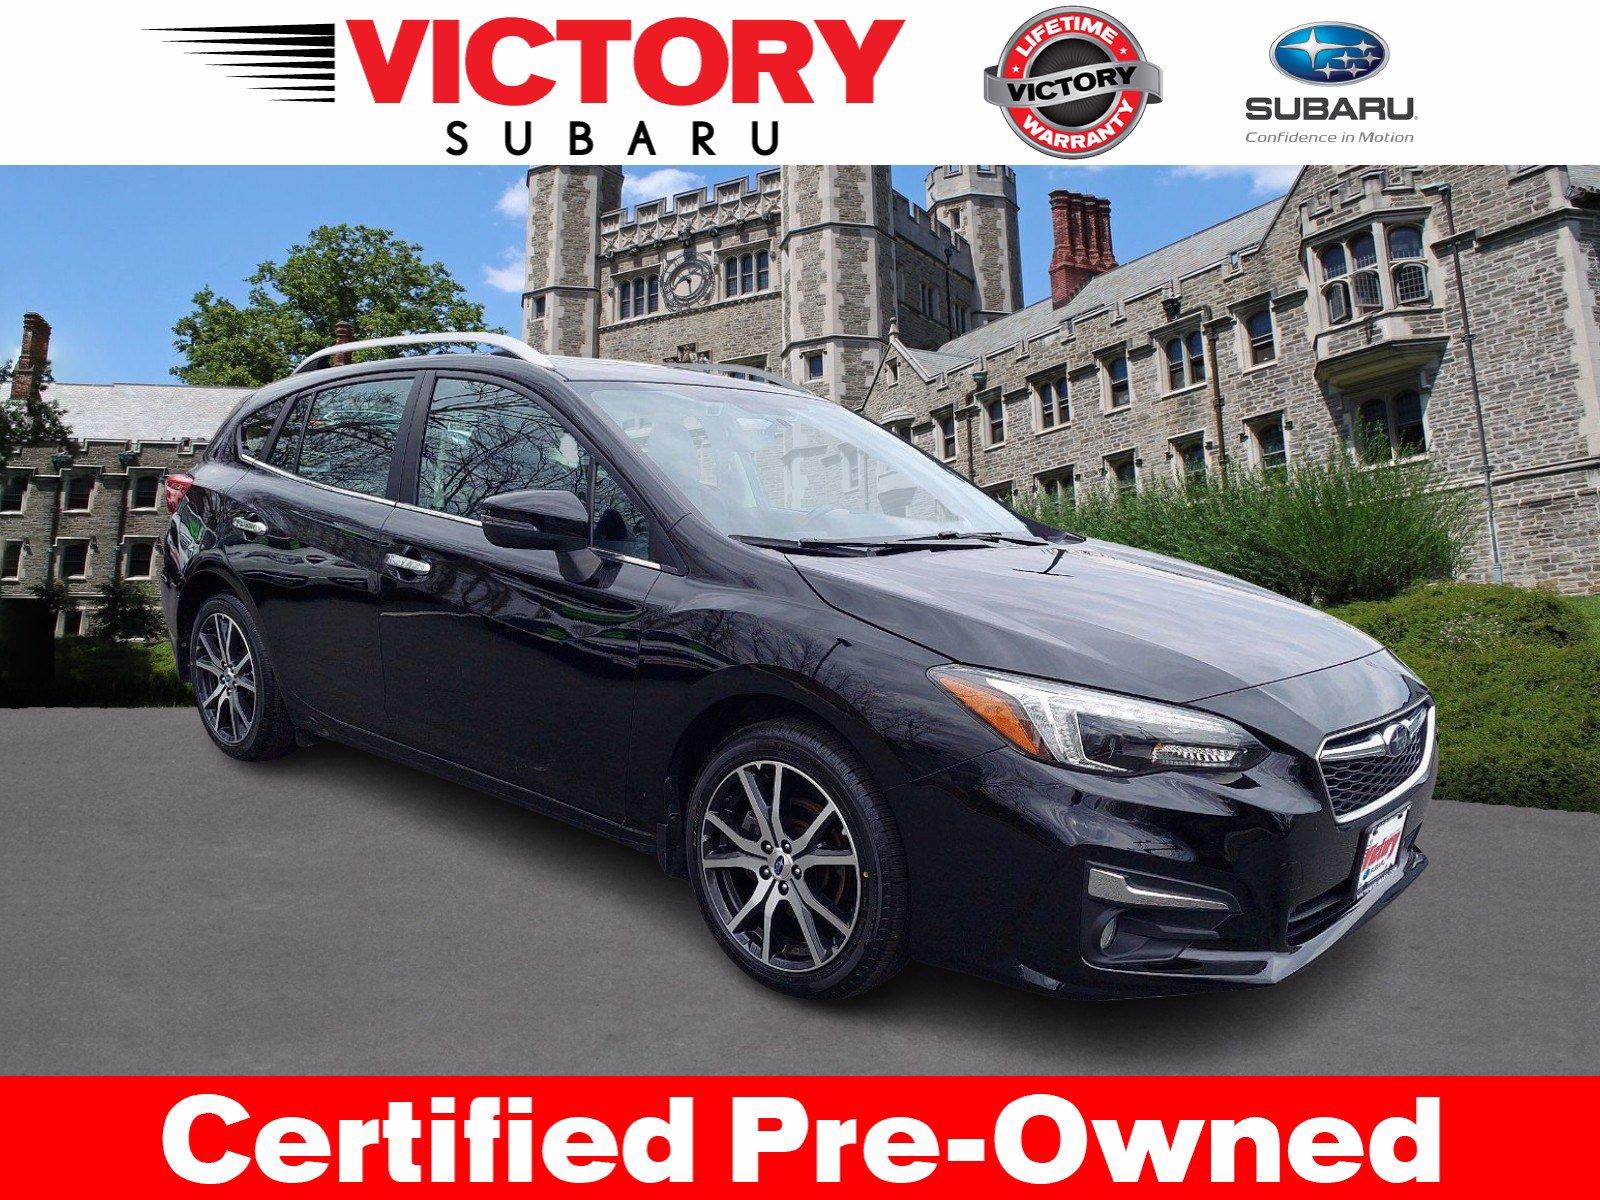 Used 2019 Subaru Impreza Limited for sale $24,444 at Victory Lotus in New Brunswick, NJ 08901 1